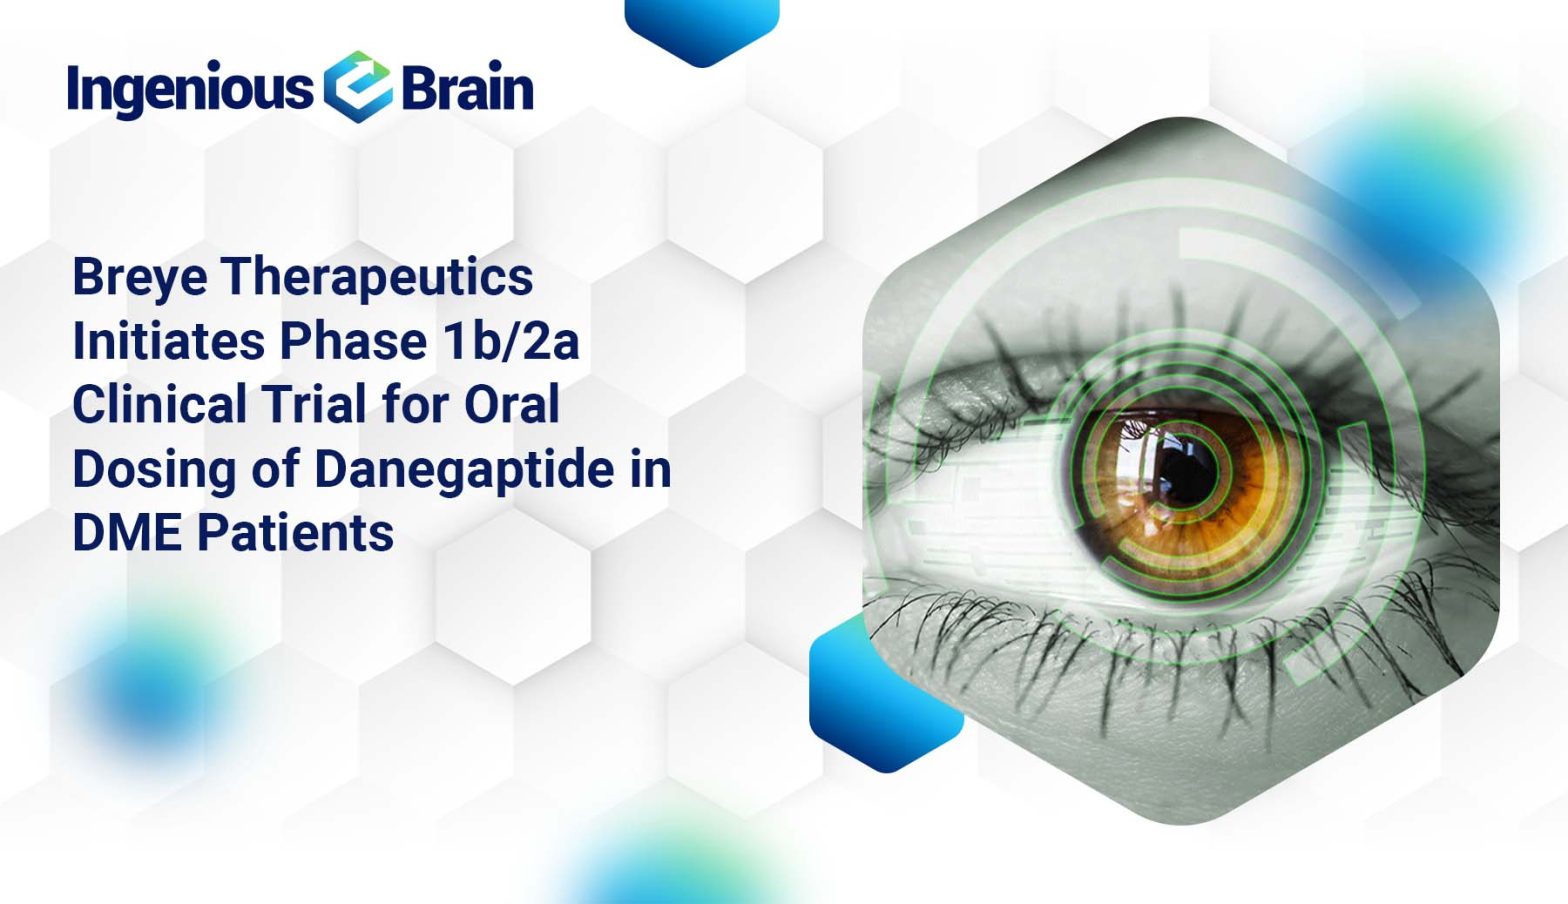 Breye Therapeutics: Oral Danegaptide in DME Patients